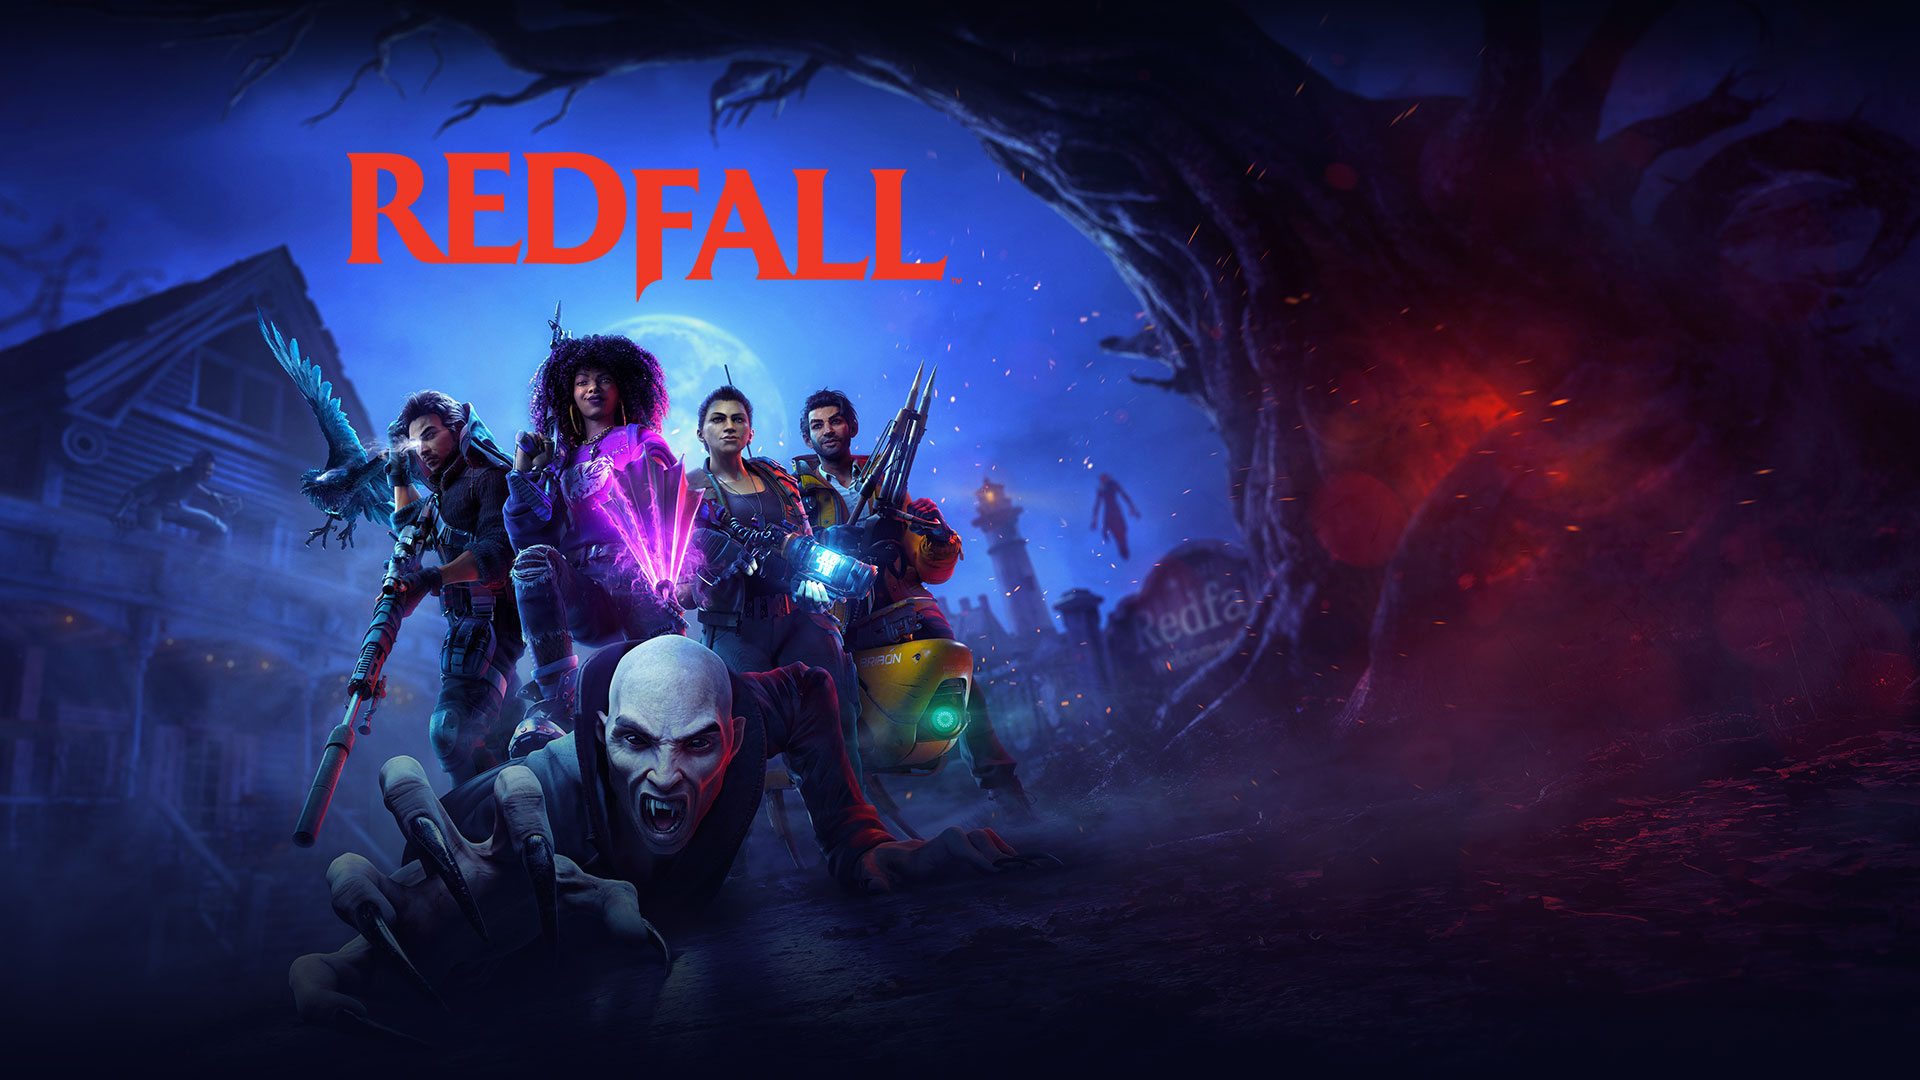 『Redfall』、吸血鬼を滅亡させようと武器を持って立つキャラクターたちから、這って逃げる吸血鬼。